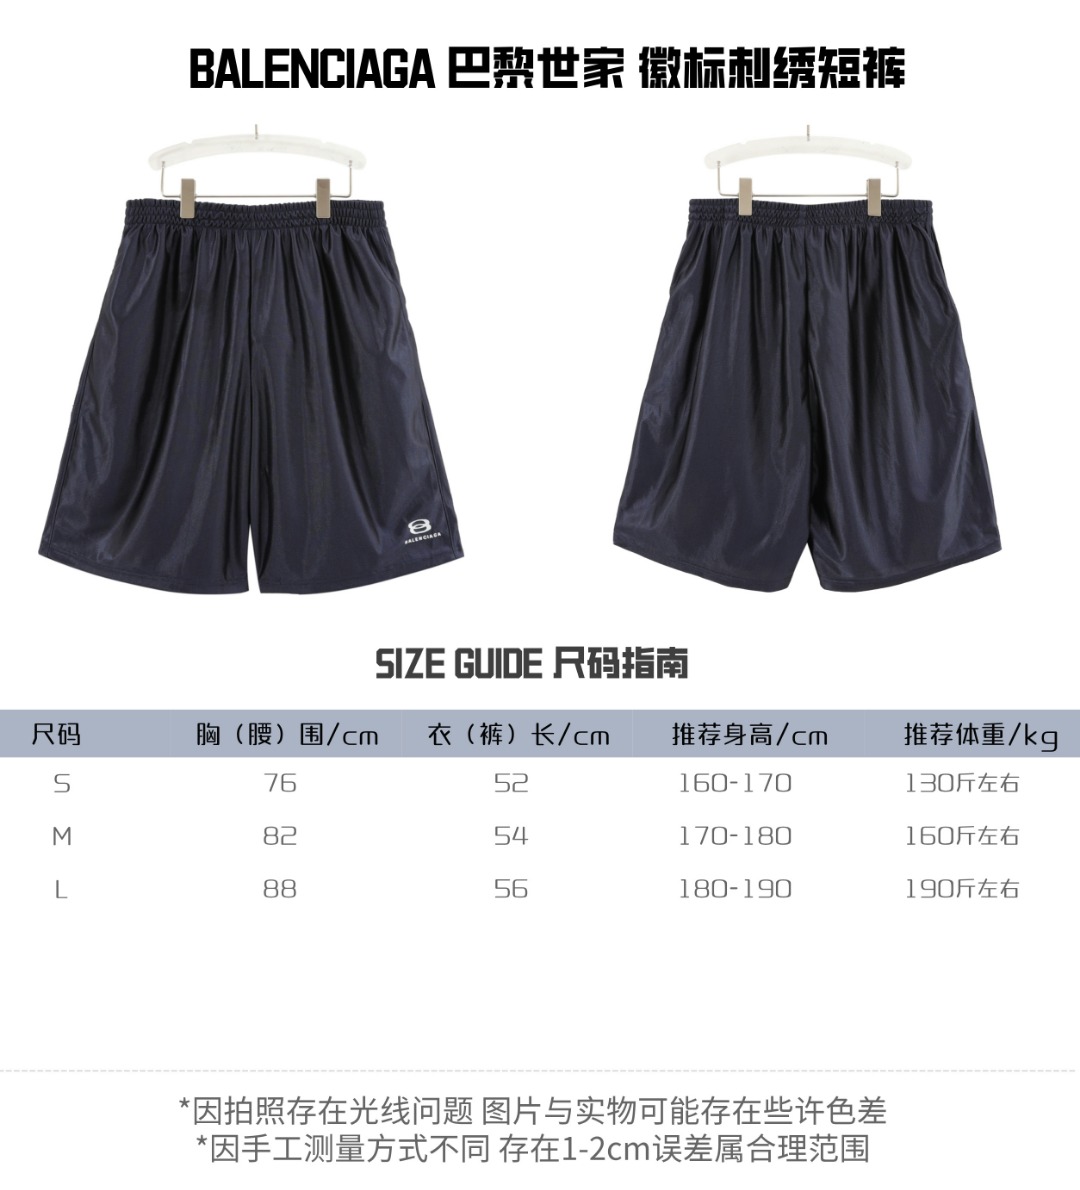 Balenciaga Clothing Shorts Embroidery